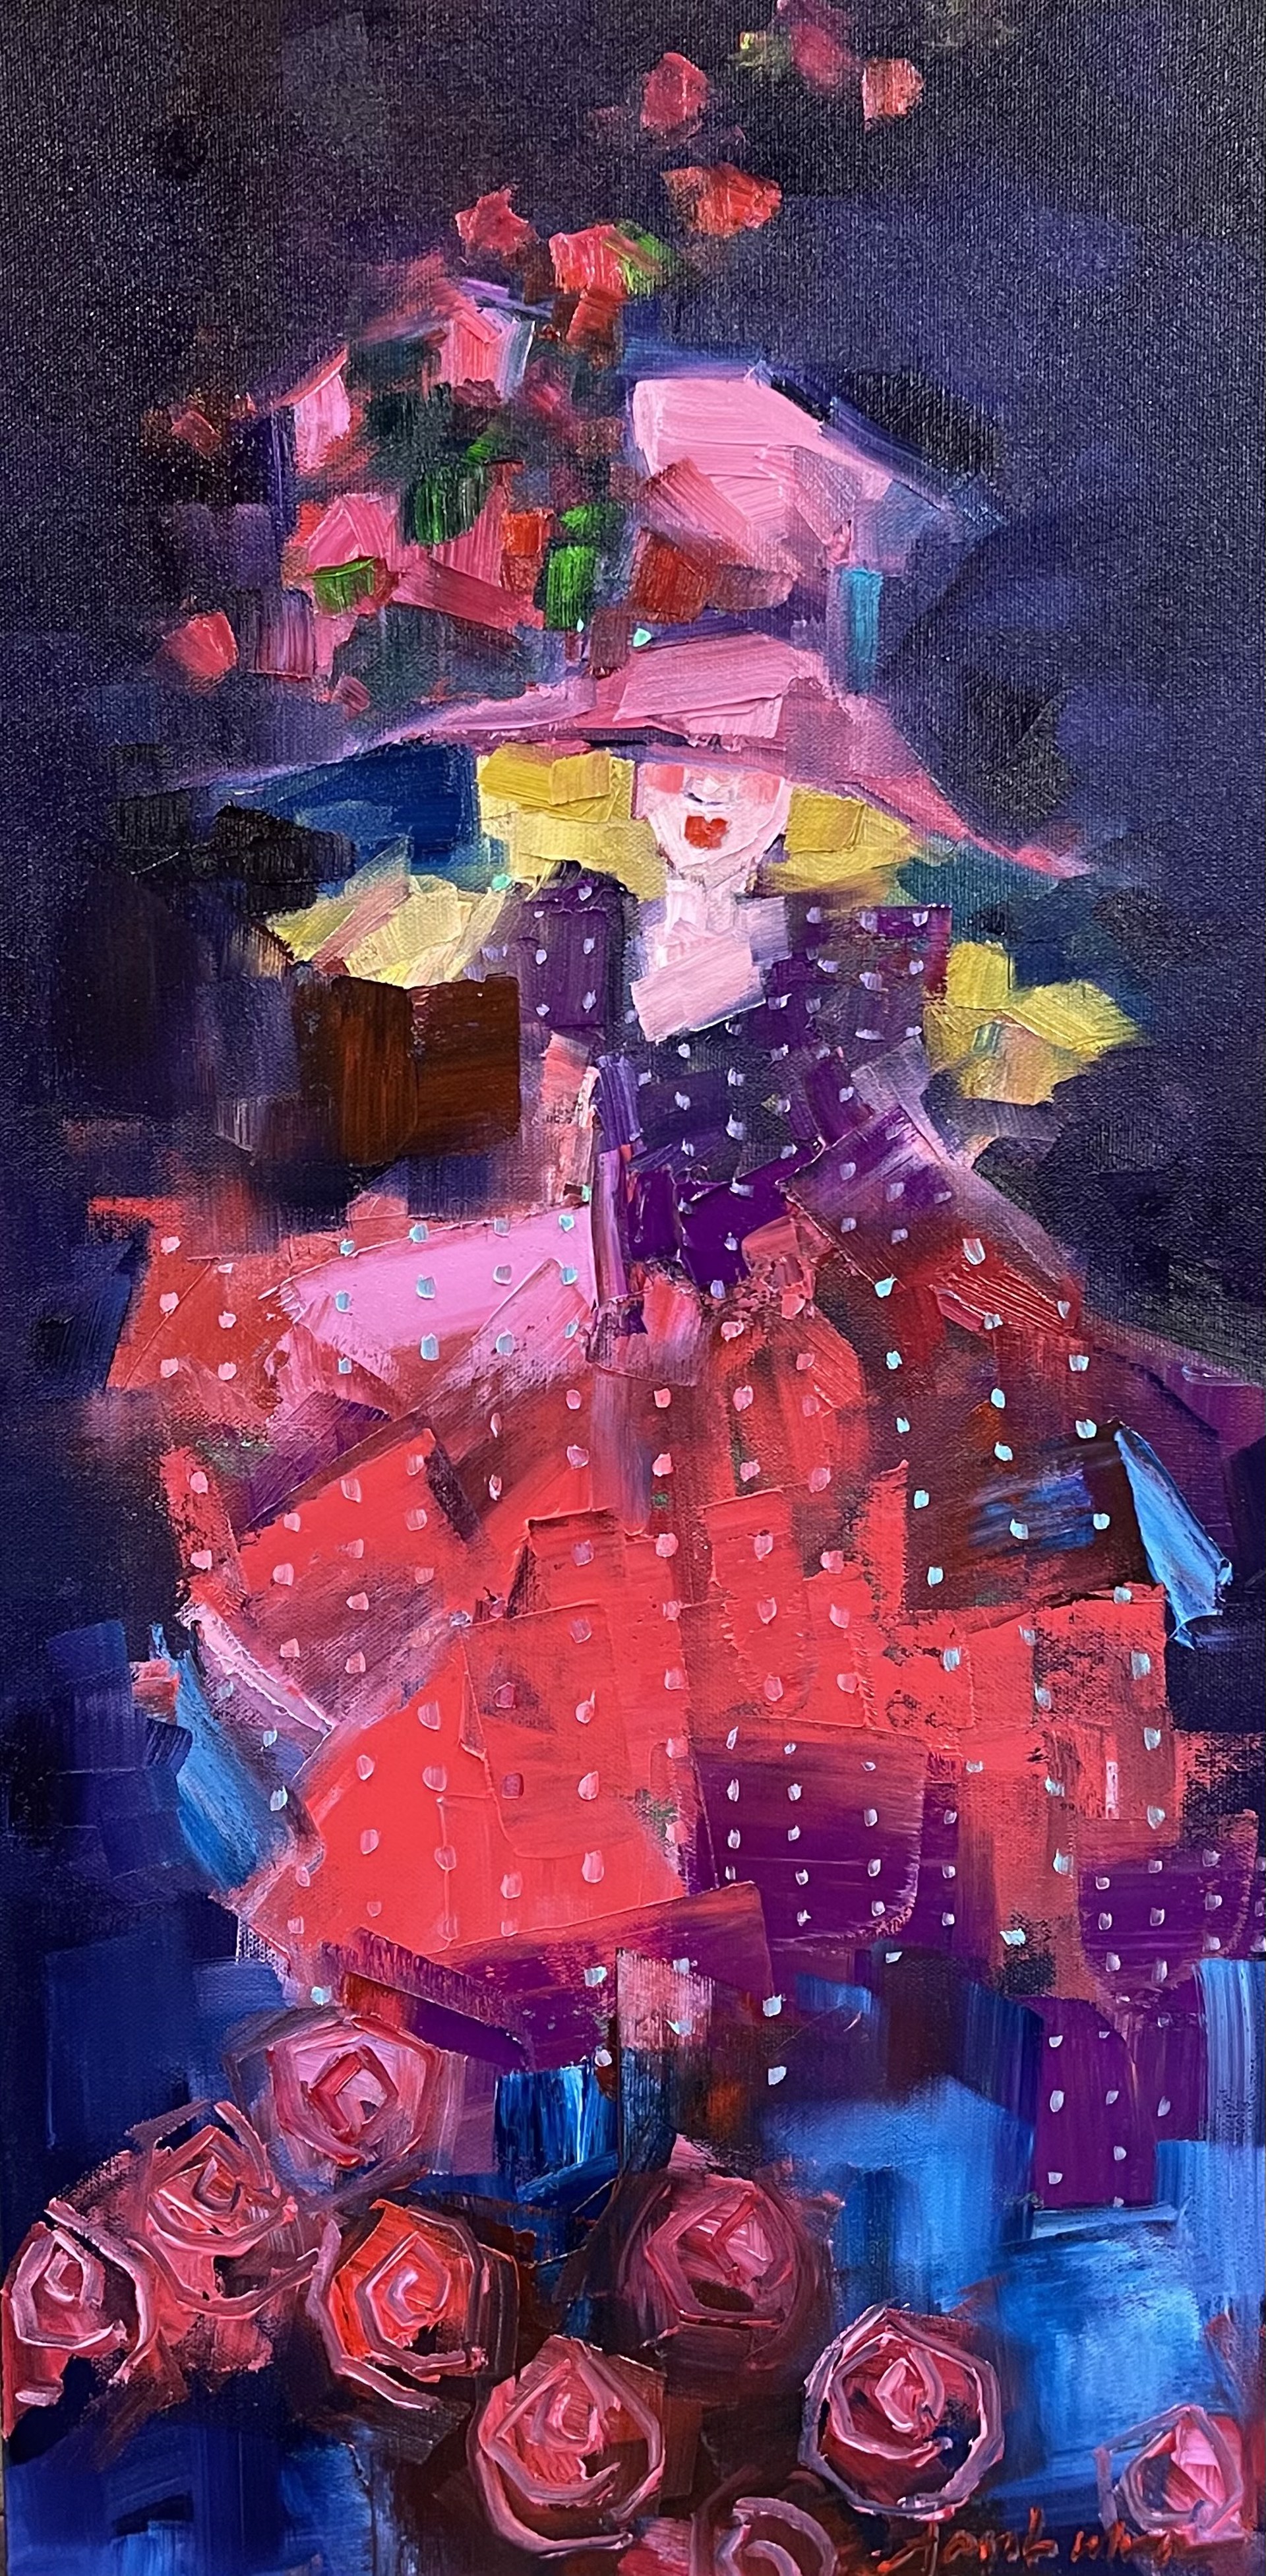 petticoat posies by Angela Morgan